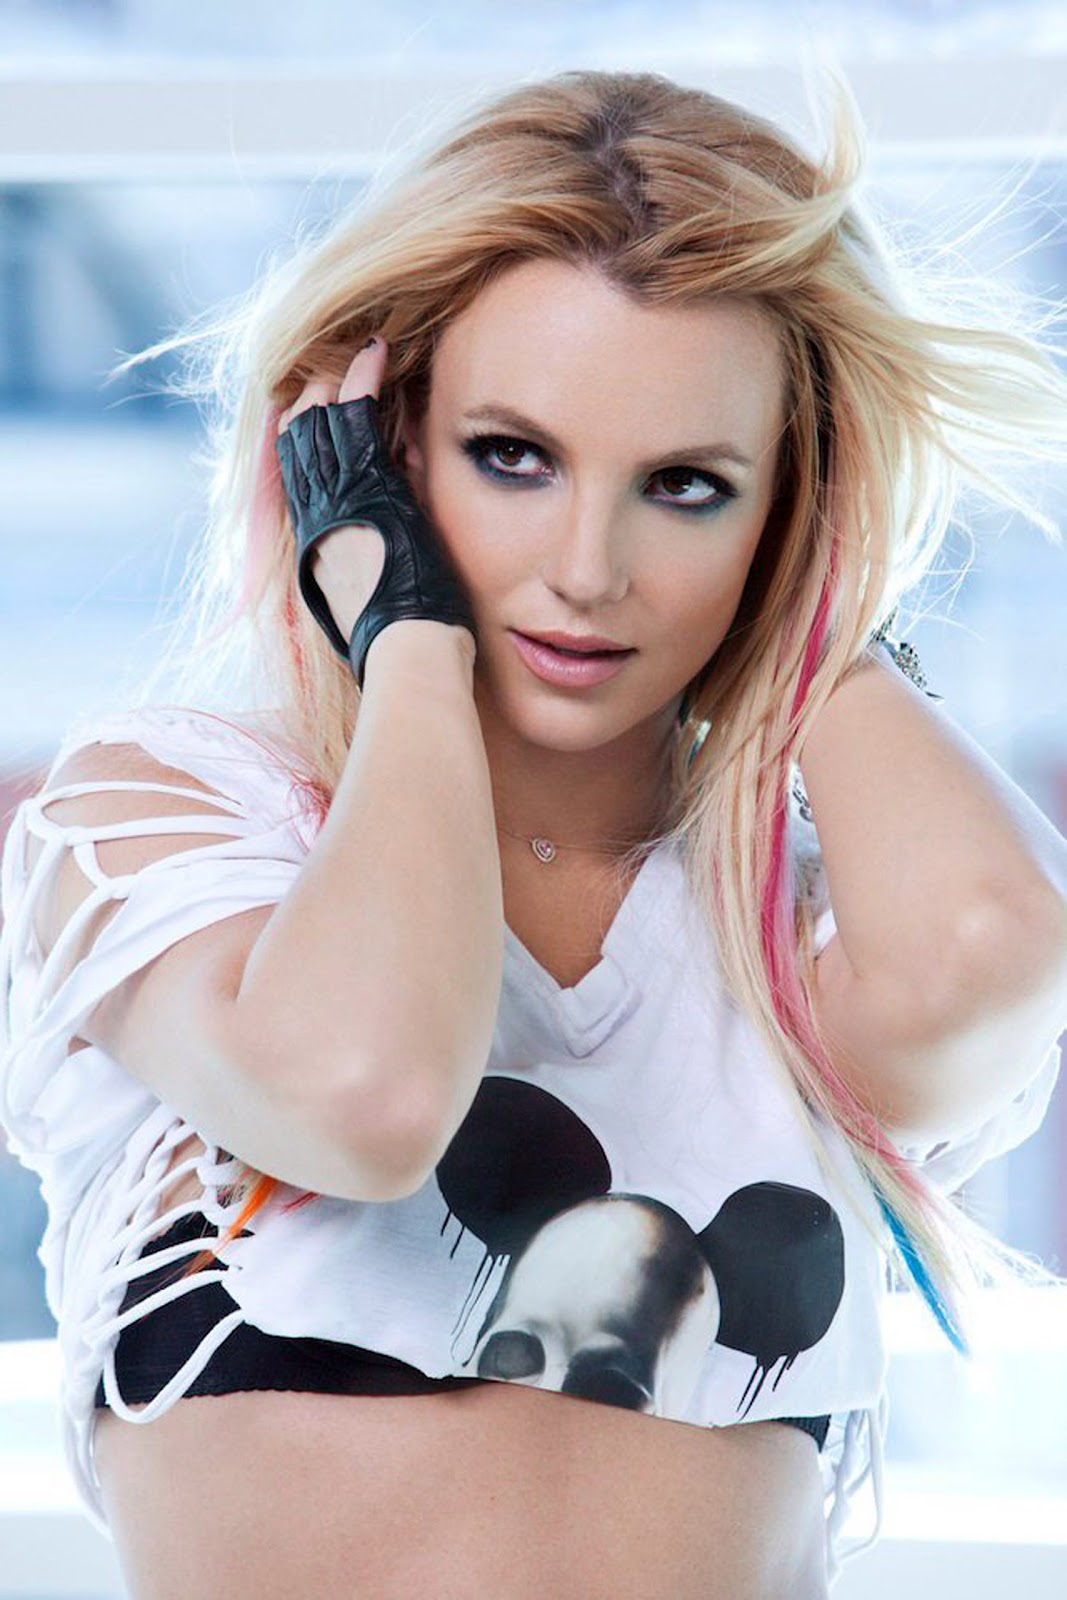 http://2.bp.blogspot.com/-DwWg-lFocA8/TmRrw8DojeI/AAAAAAAACp4/2bzCXHx5k3Y/s1600/Britney+Spears+2011+I+Wanna+Go+5.jpg